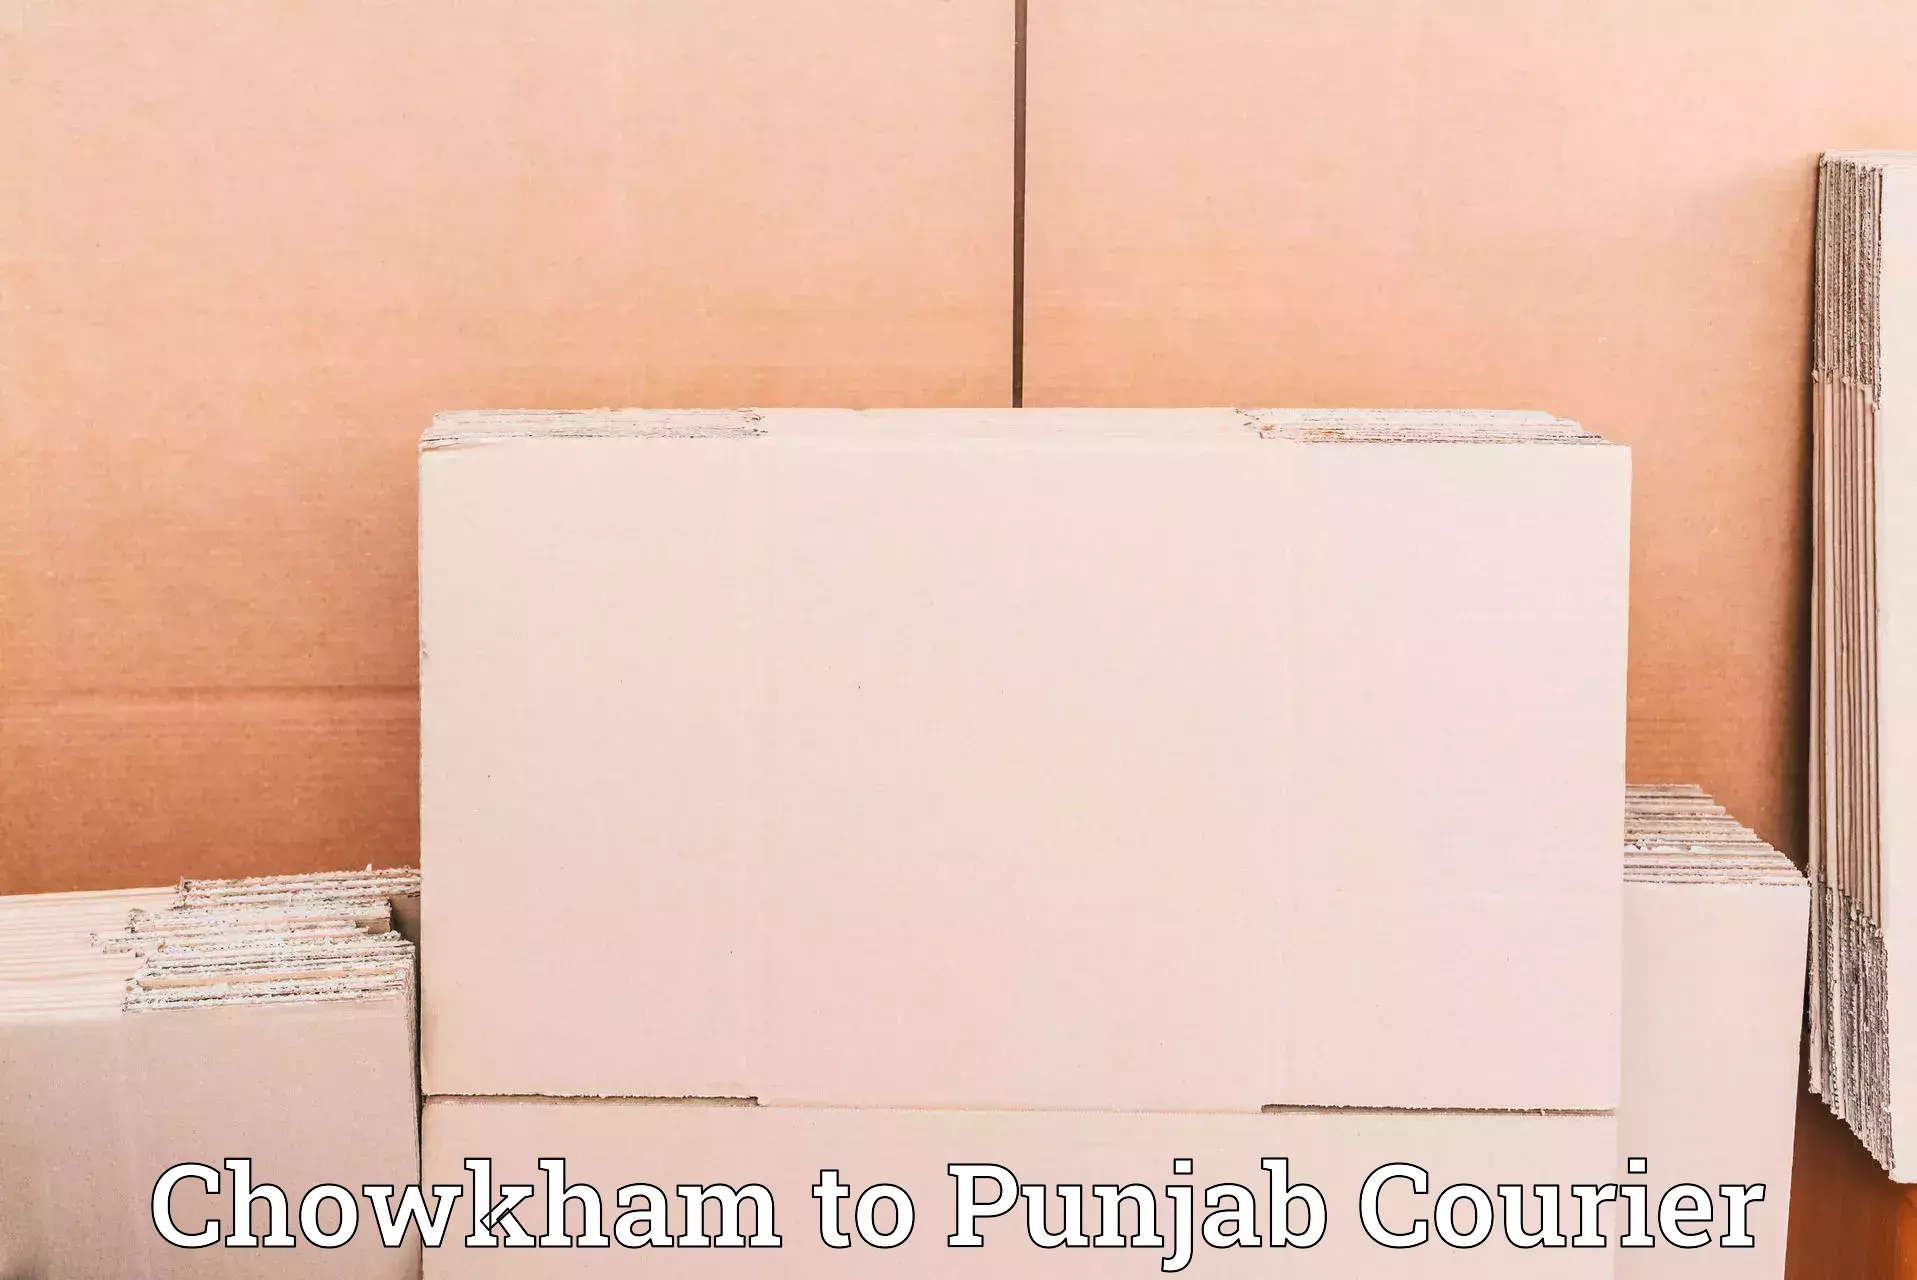 Courier service comparison Chowkham to Rajpura